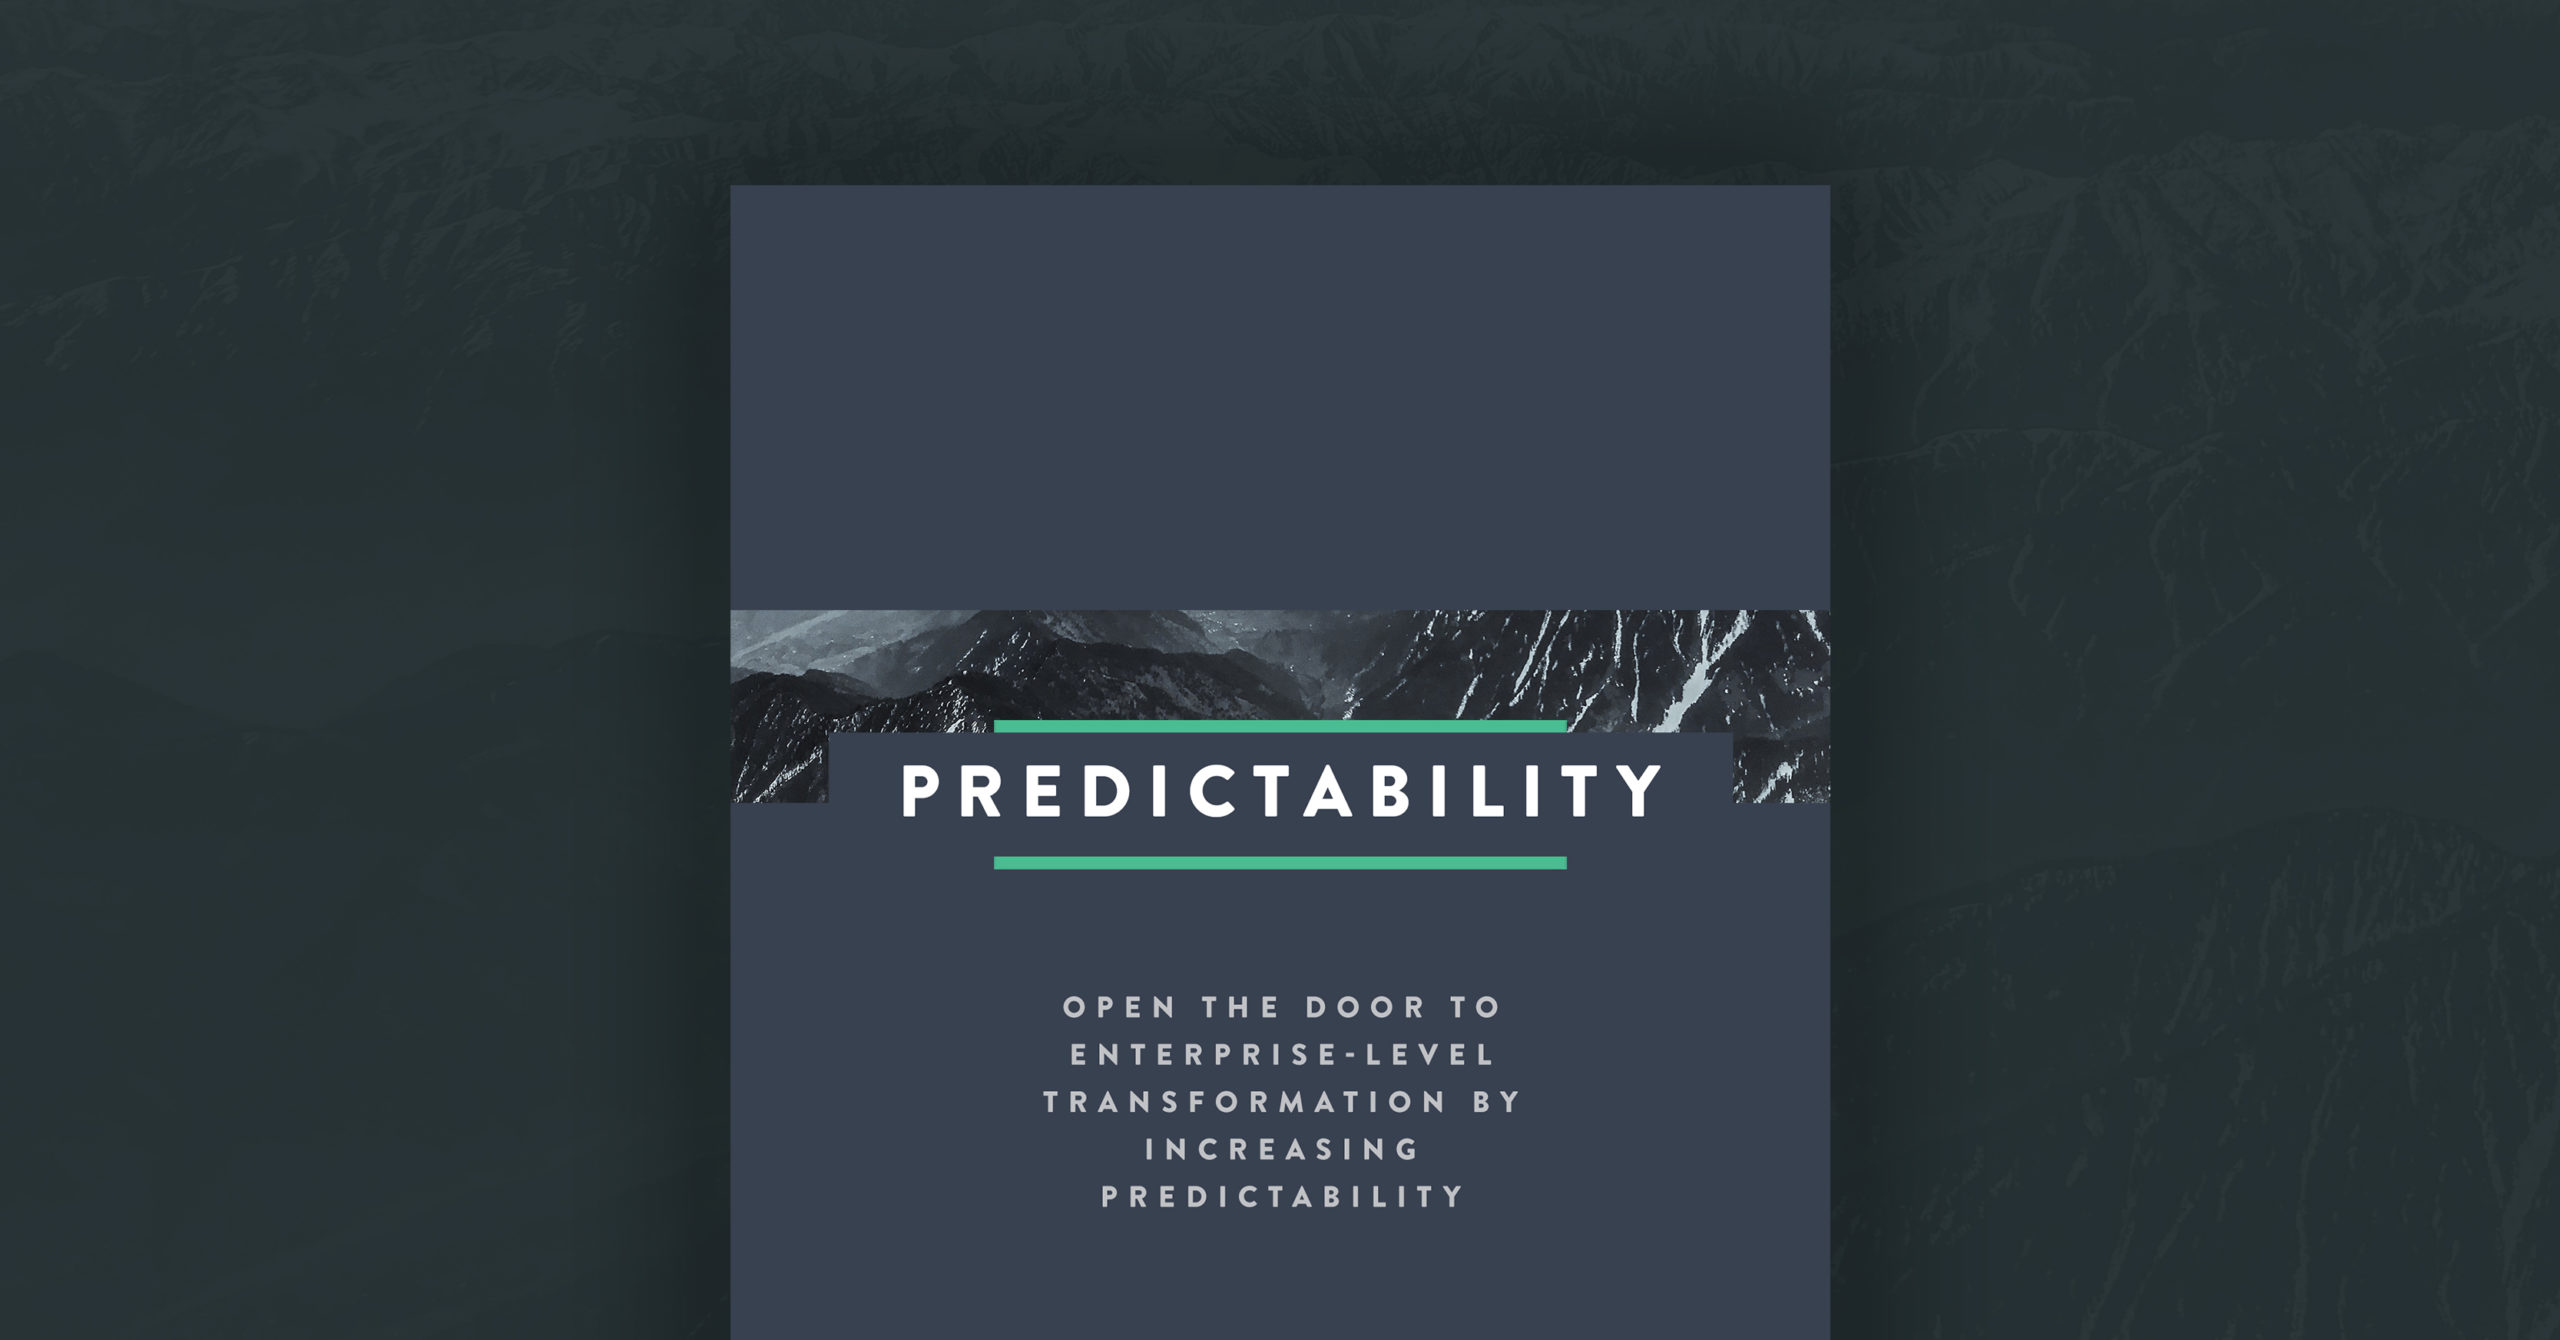 Improving Enterprise-Level Predictability with Agile